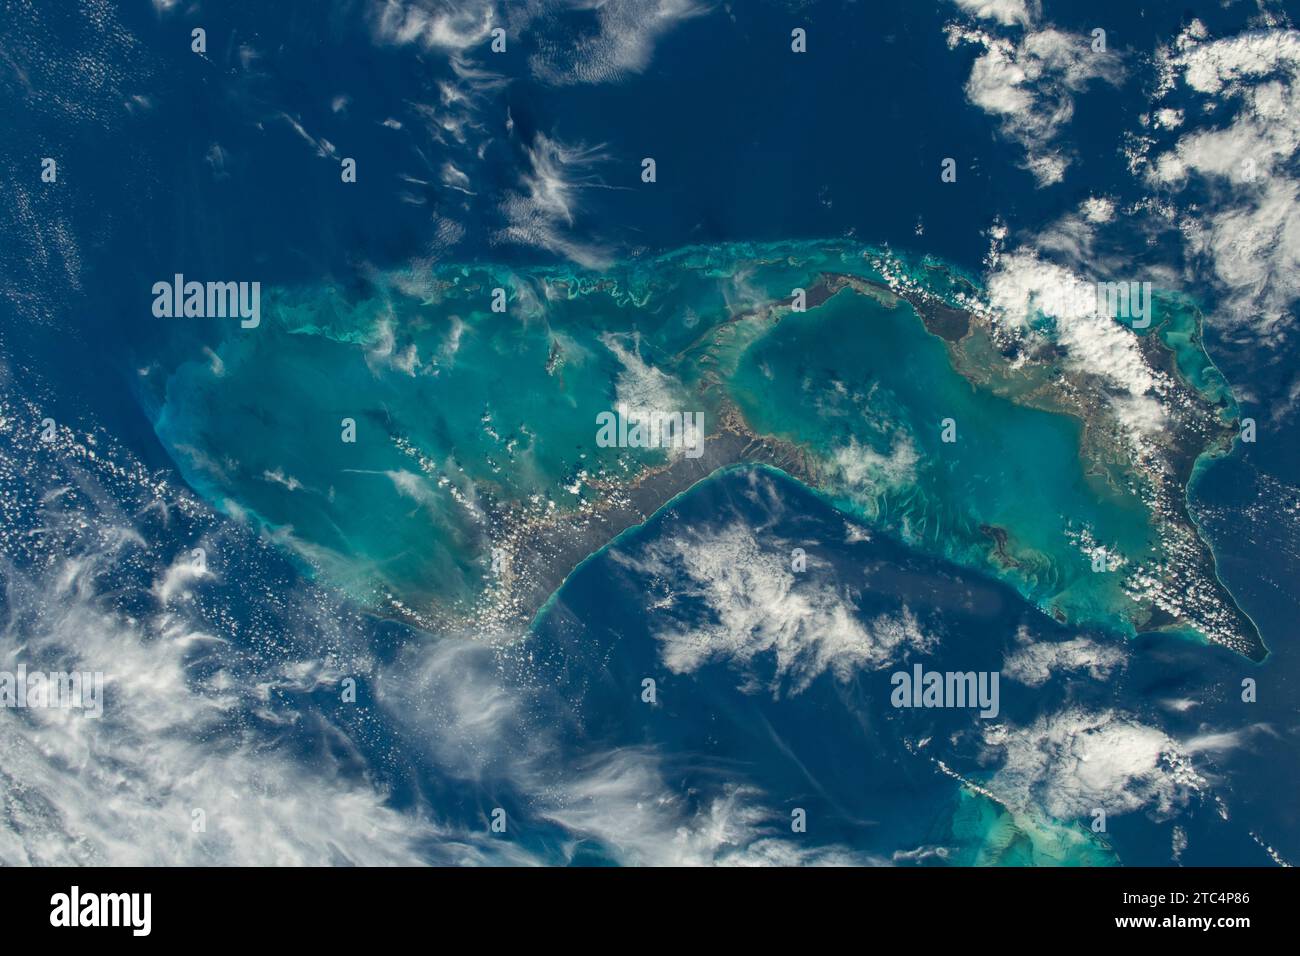 Die Insel Grand Bahama und Abaco auf den Bahamas Stockfoto